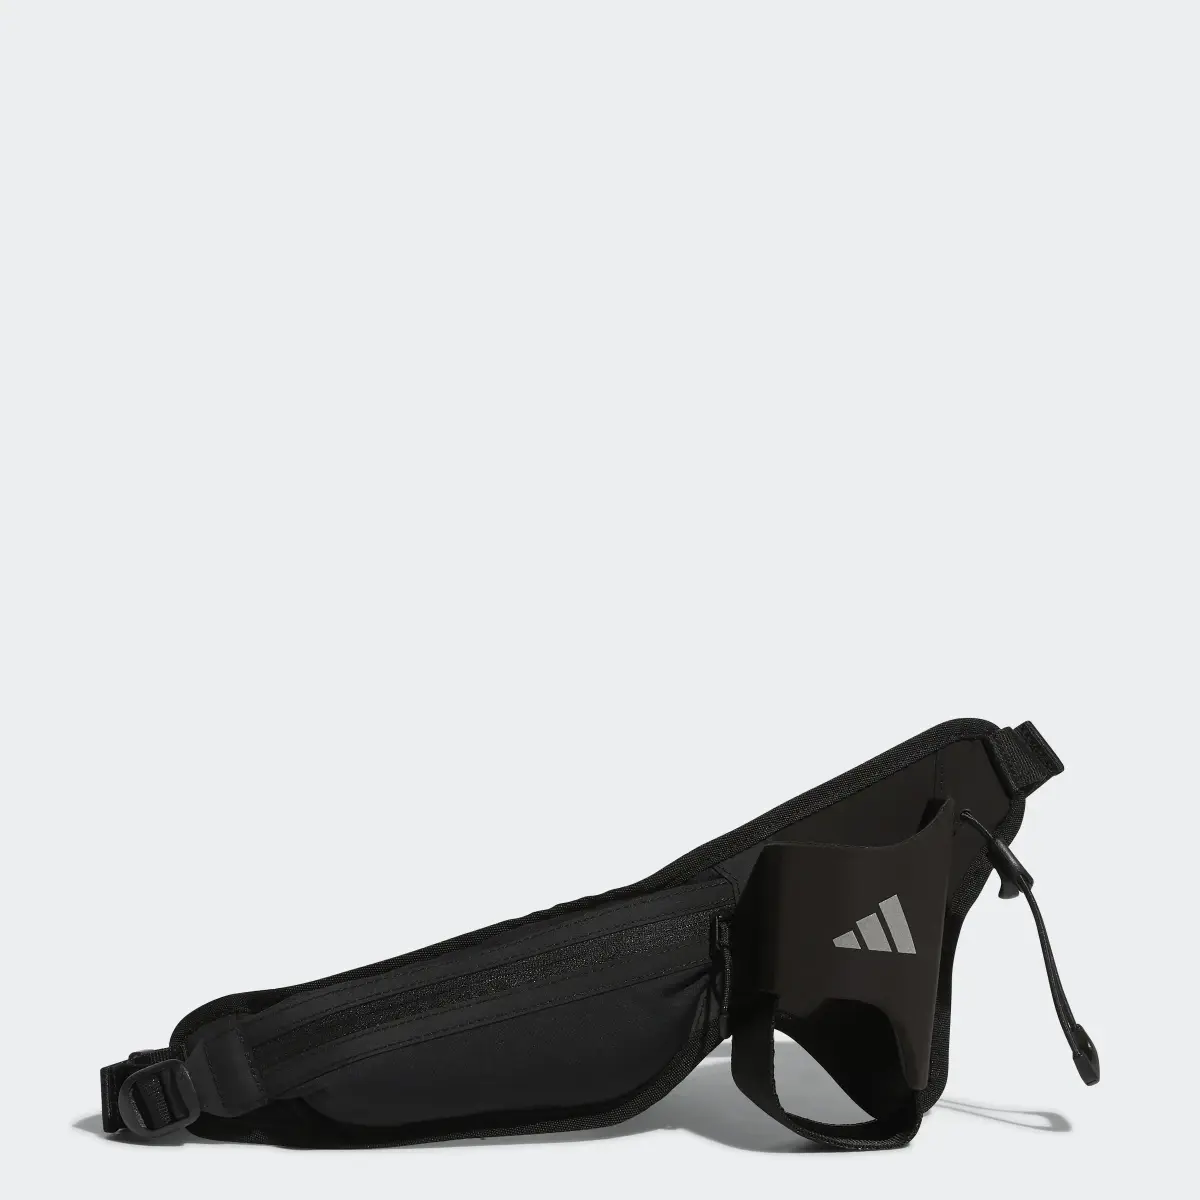 Adidas Running Bottle Bag. 1